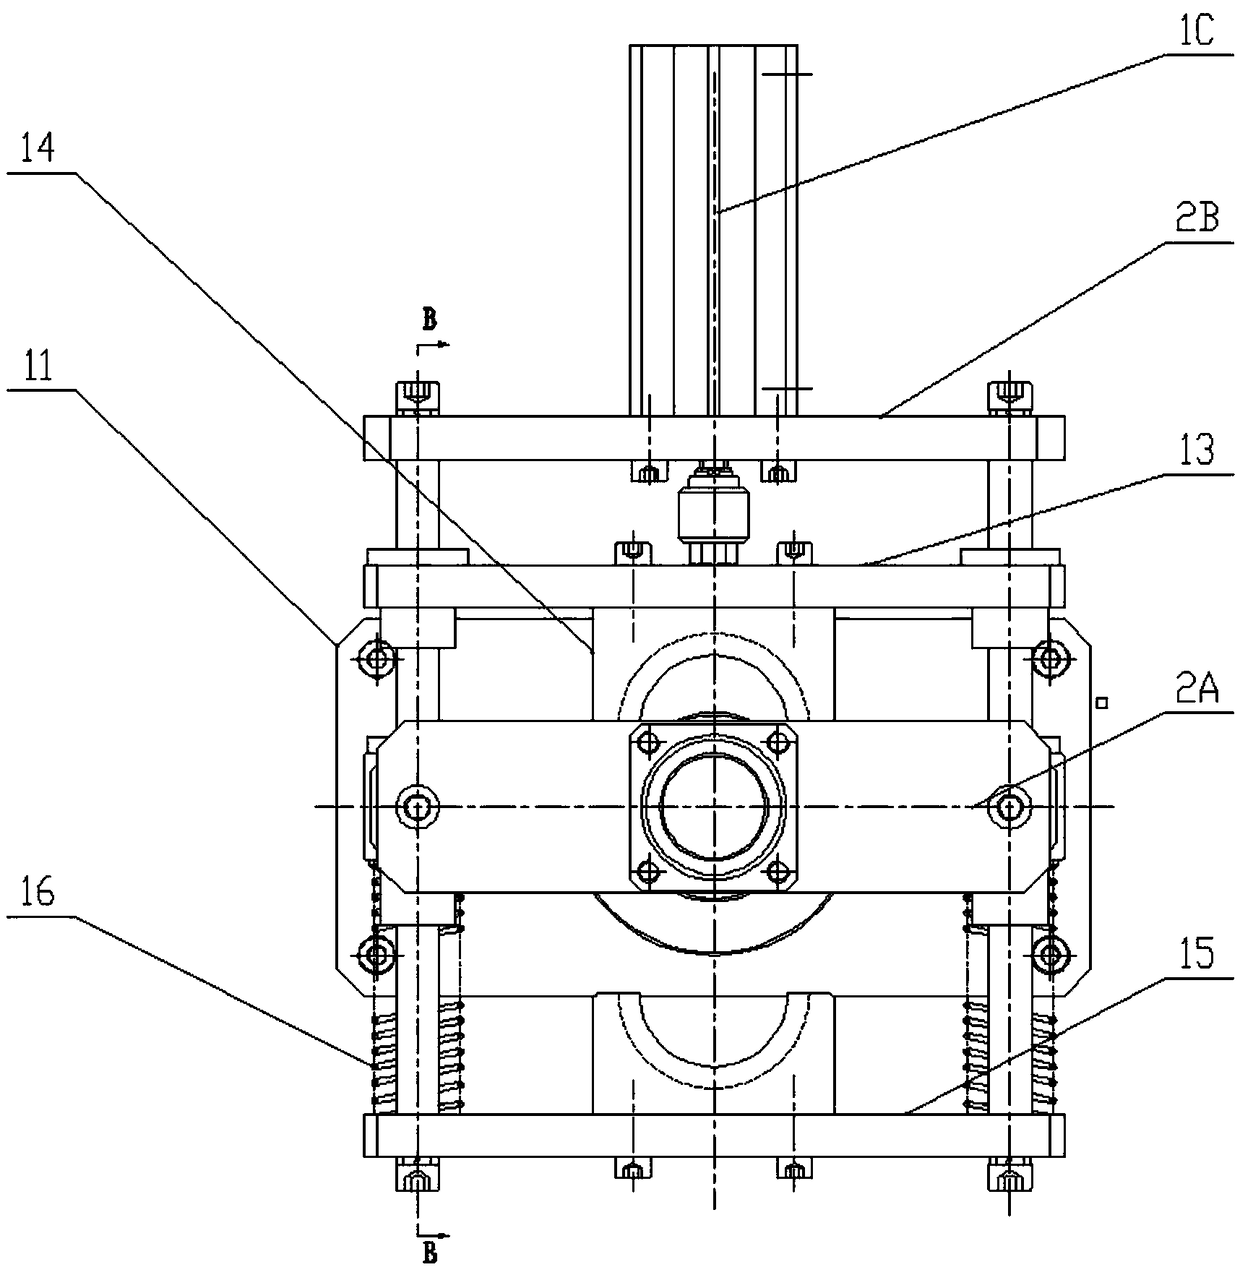 A high-pressure air-tightness testing fixture for a self-adjusting screw sleeve of a brake caliper